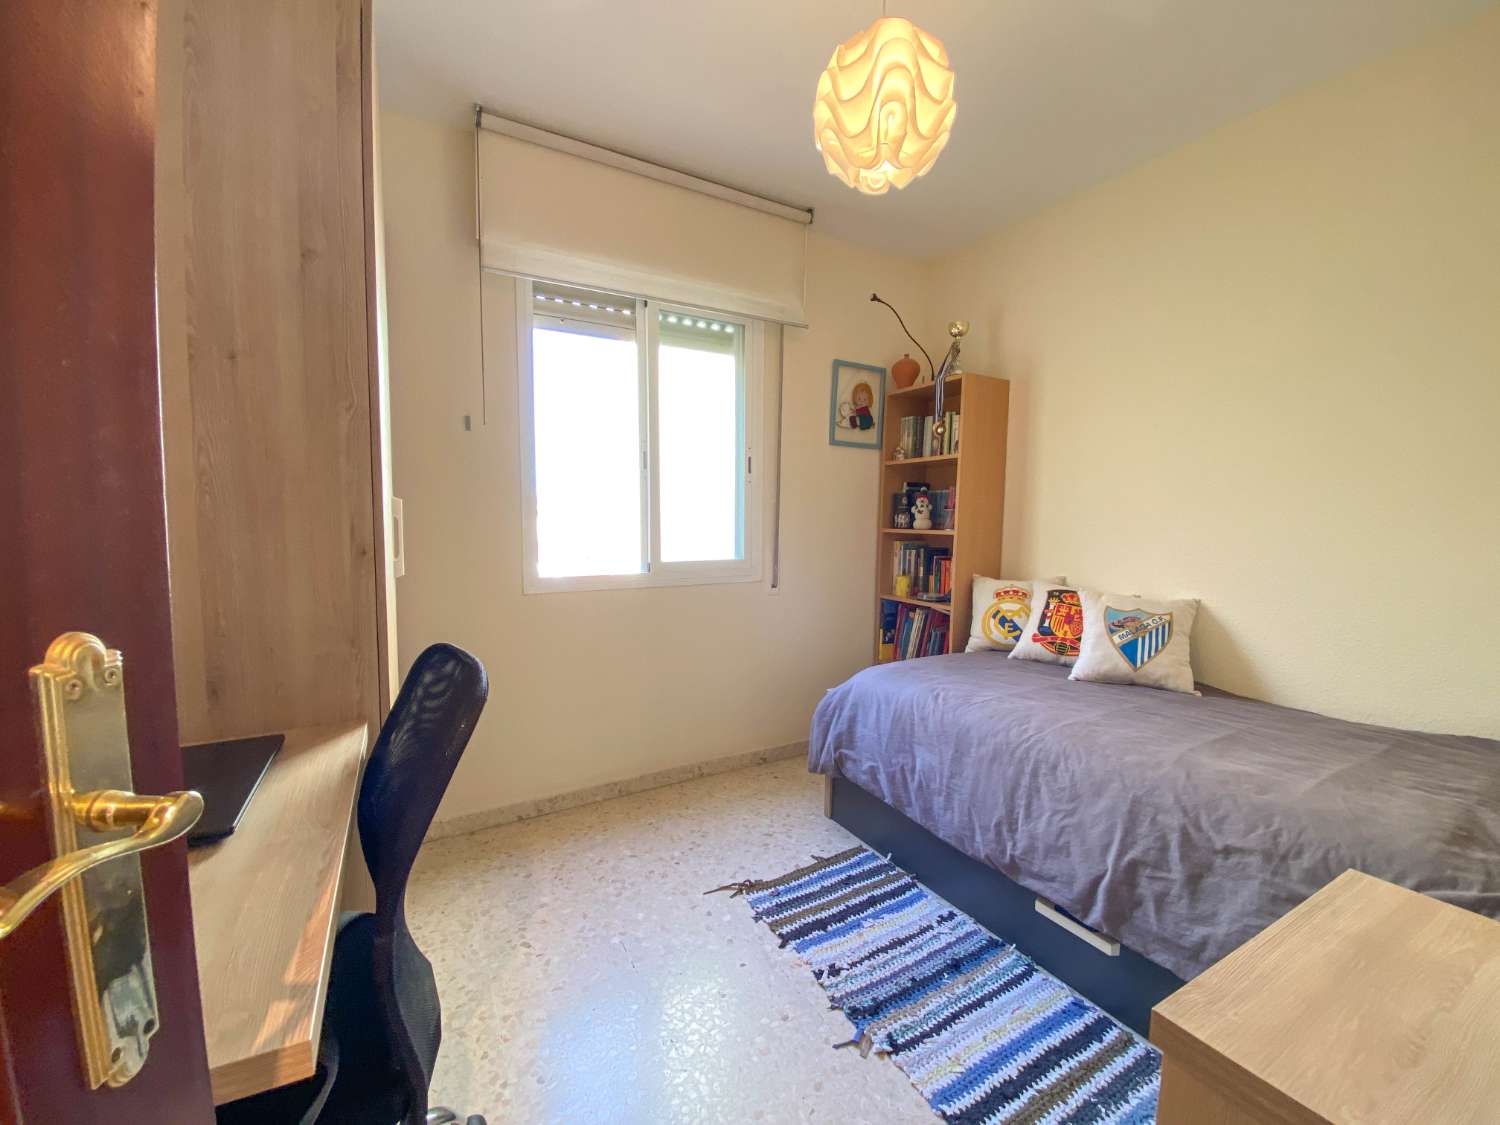 Apartment for sale in Zona Sohail (Fuengirola)